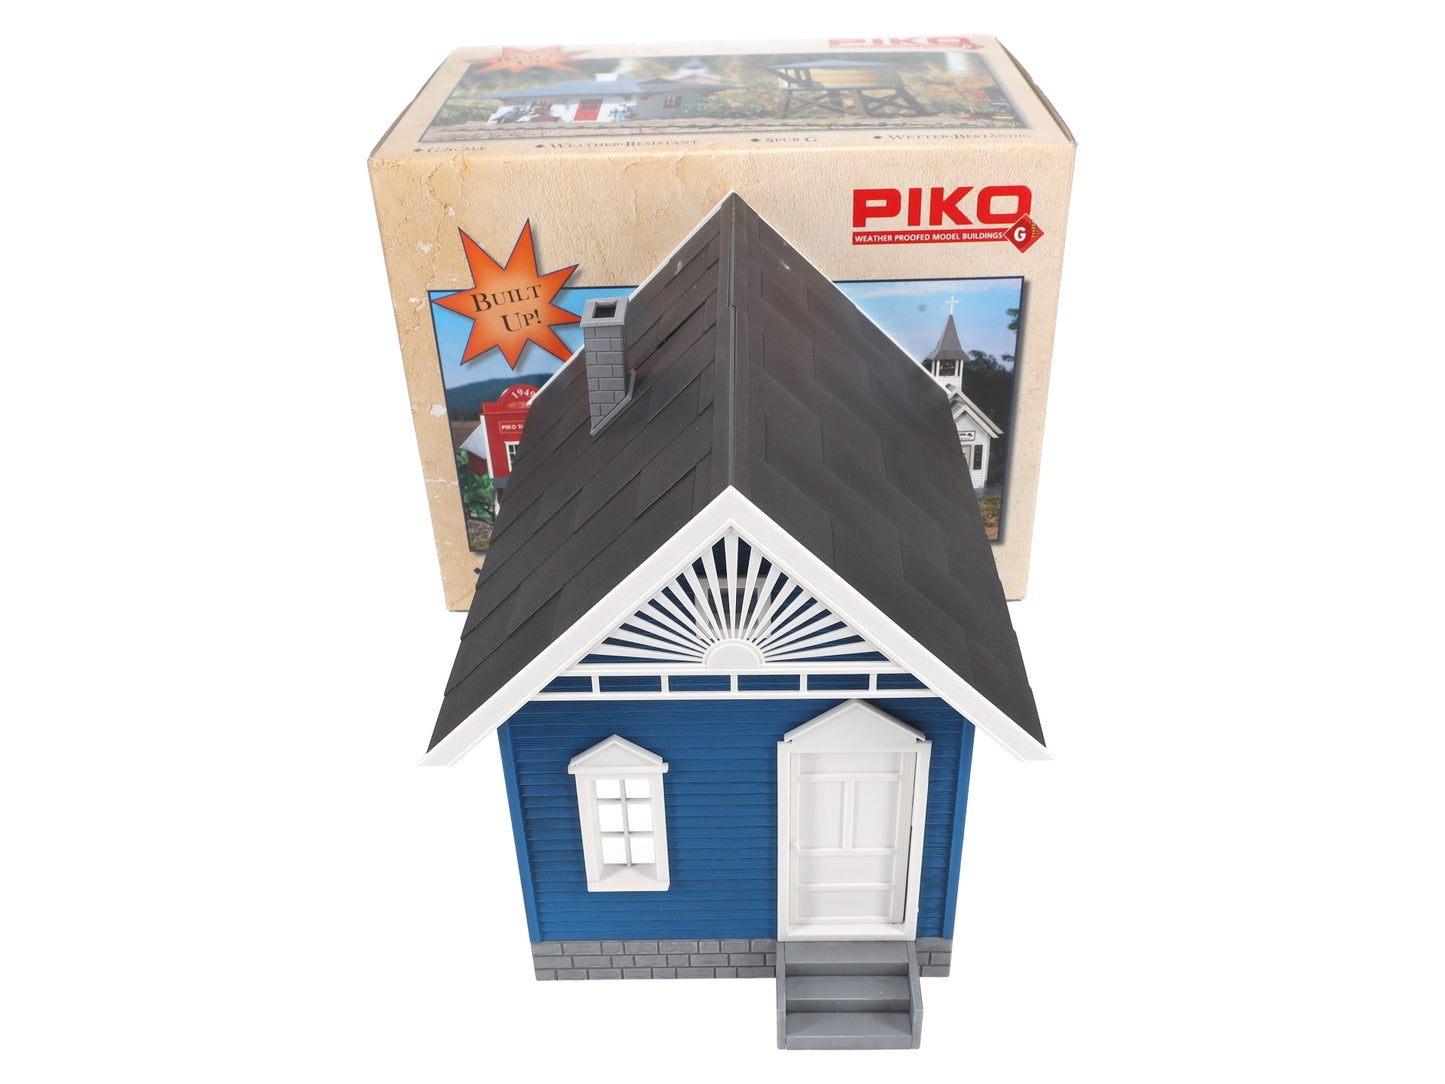 Piko 62708 G Washburn's Gingerbread House Built-Up